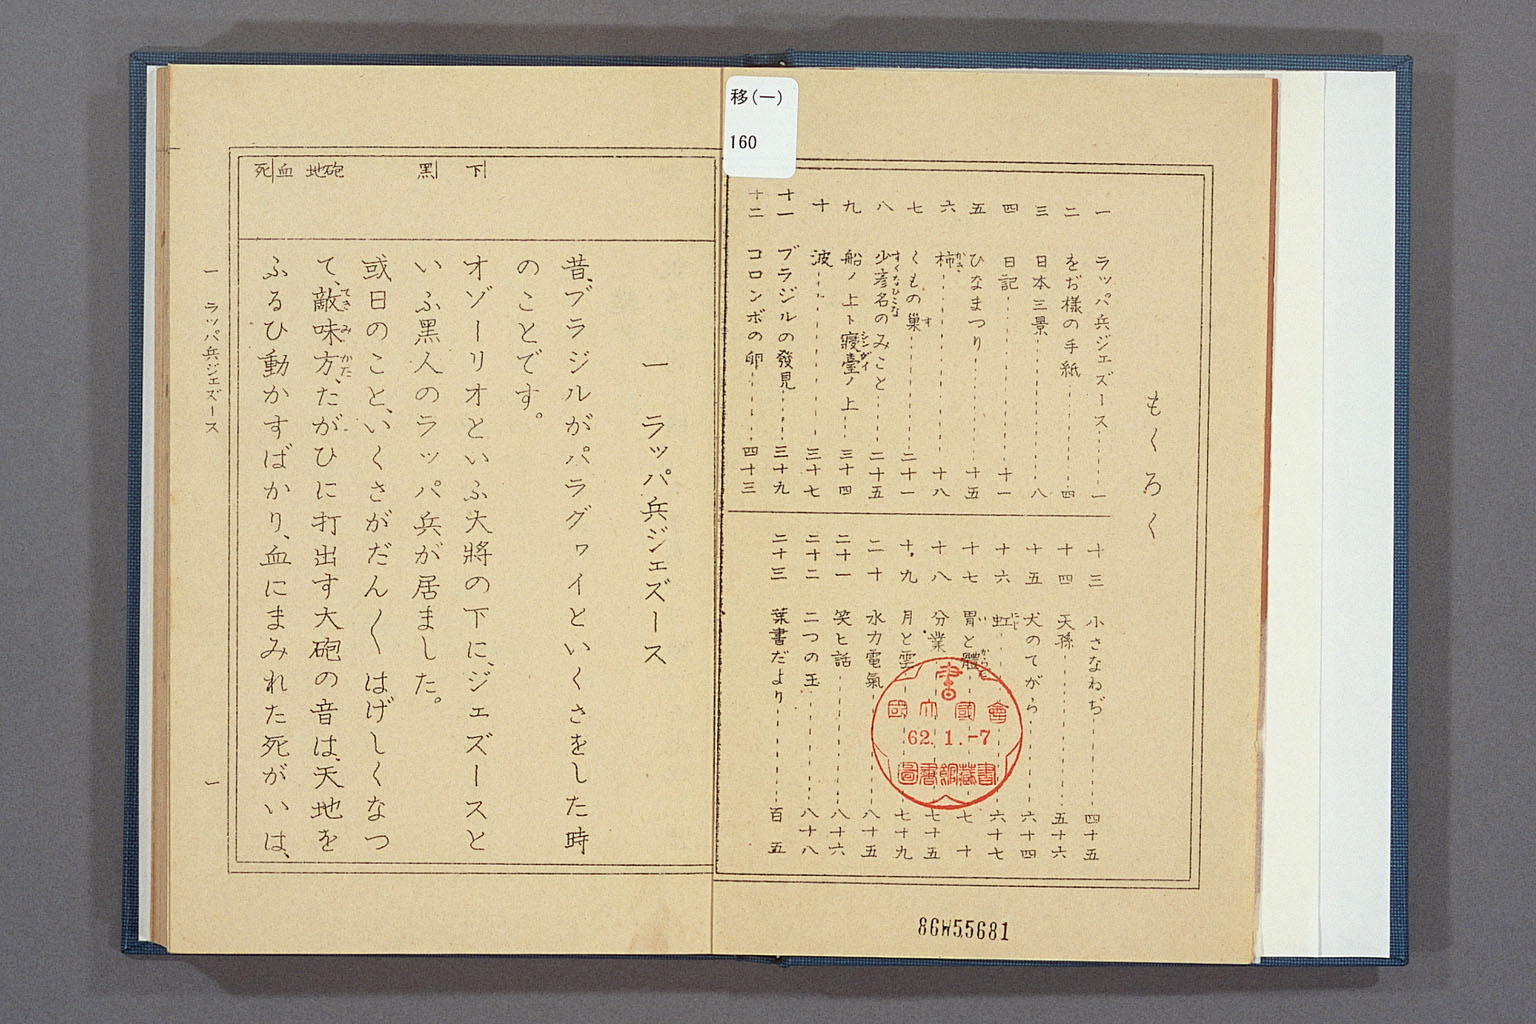 Image “Japanese language reading book”